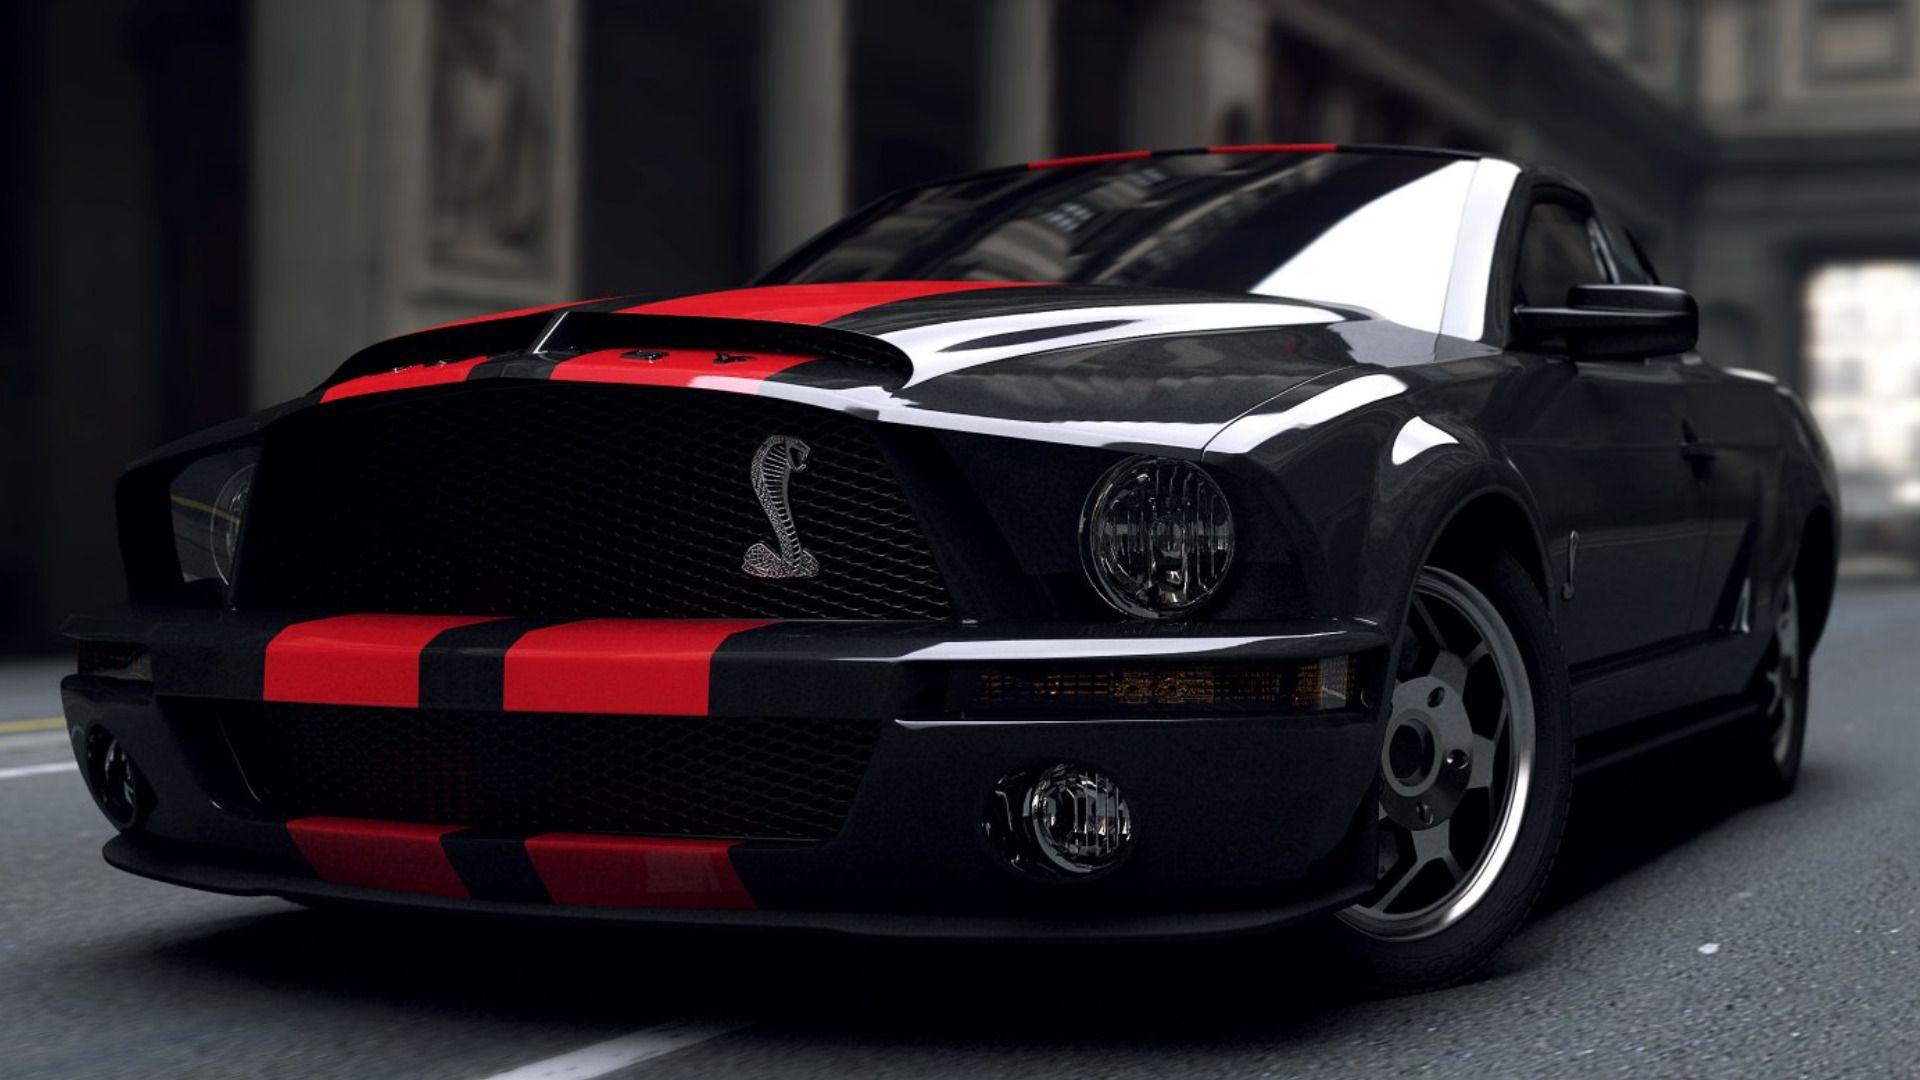 Black Mustang GT Wallpapers Top Free Black Mustang GT